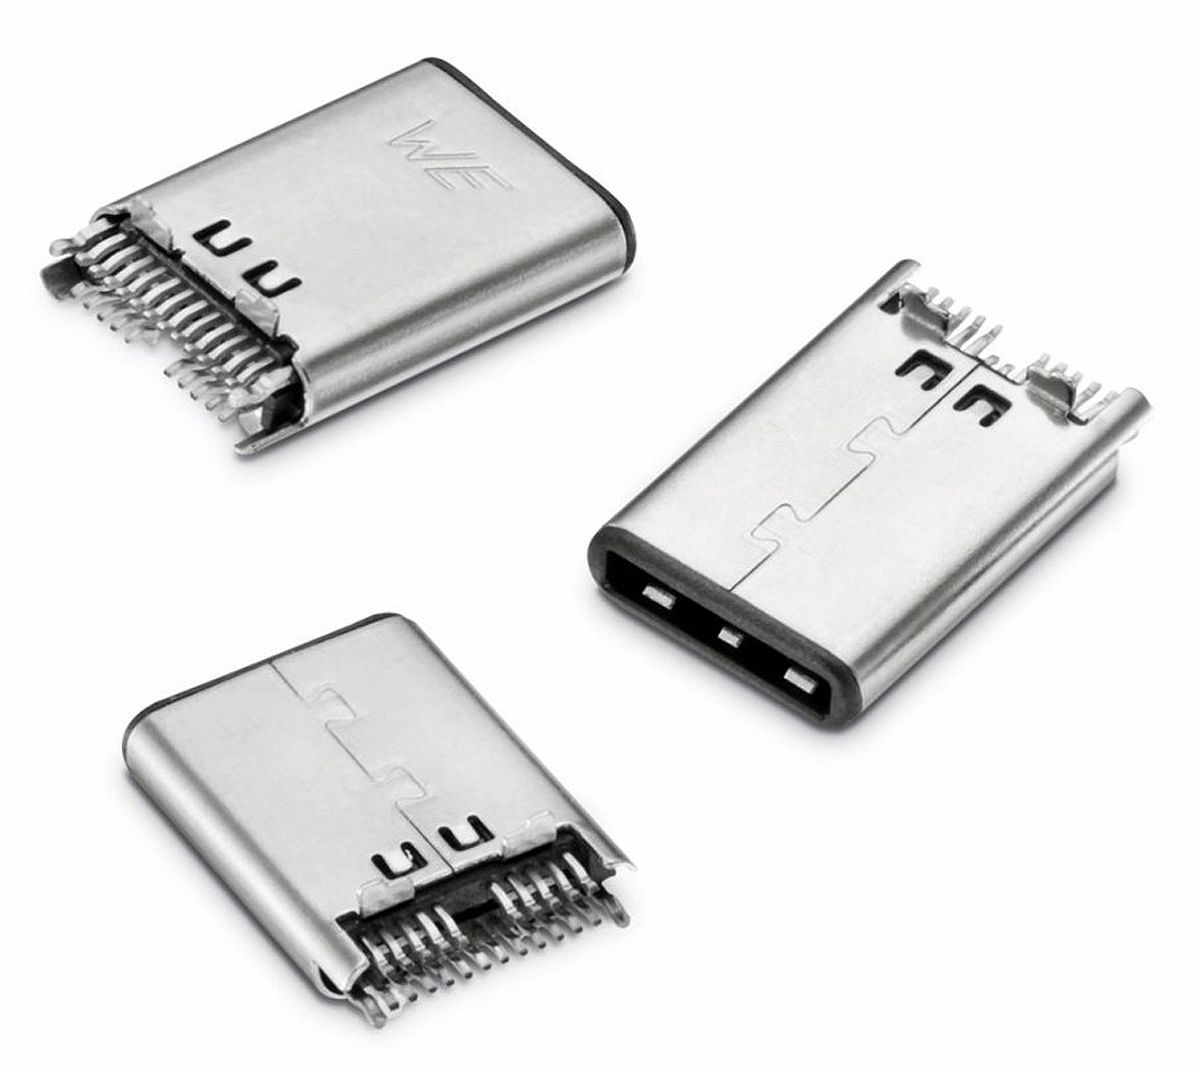 Wurth Elektronik Straight, SMT, Plug Type C 3.1 USB Connector